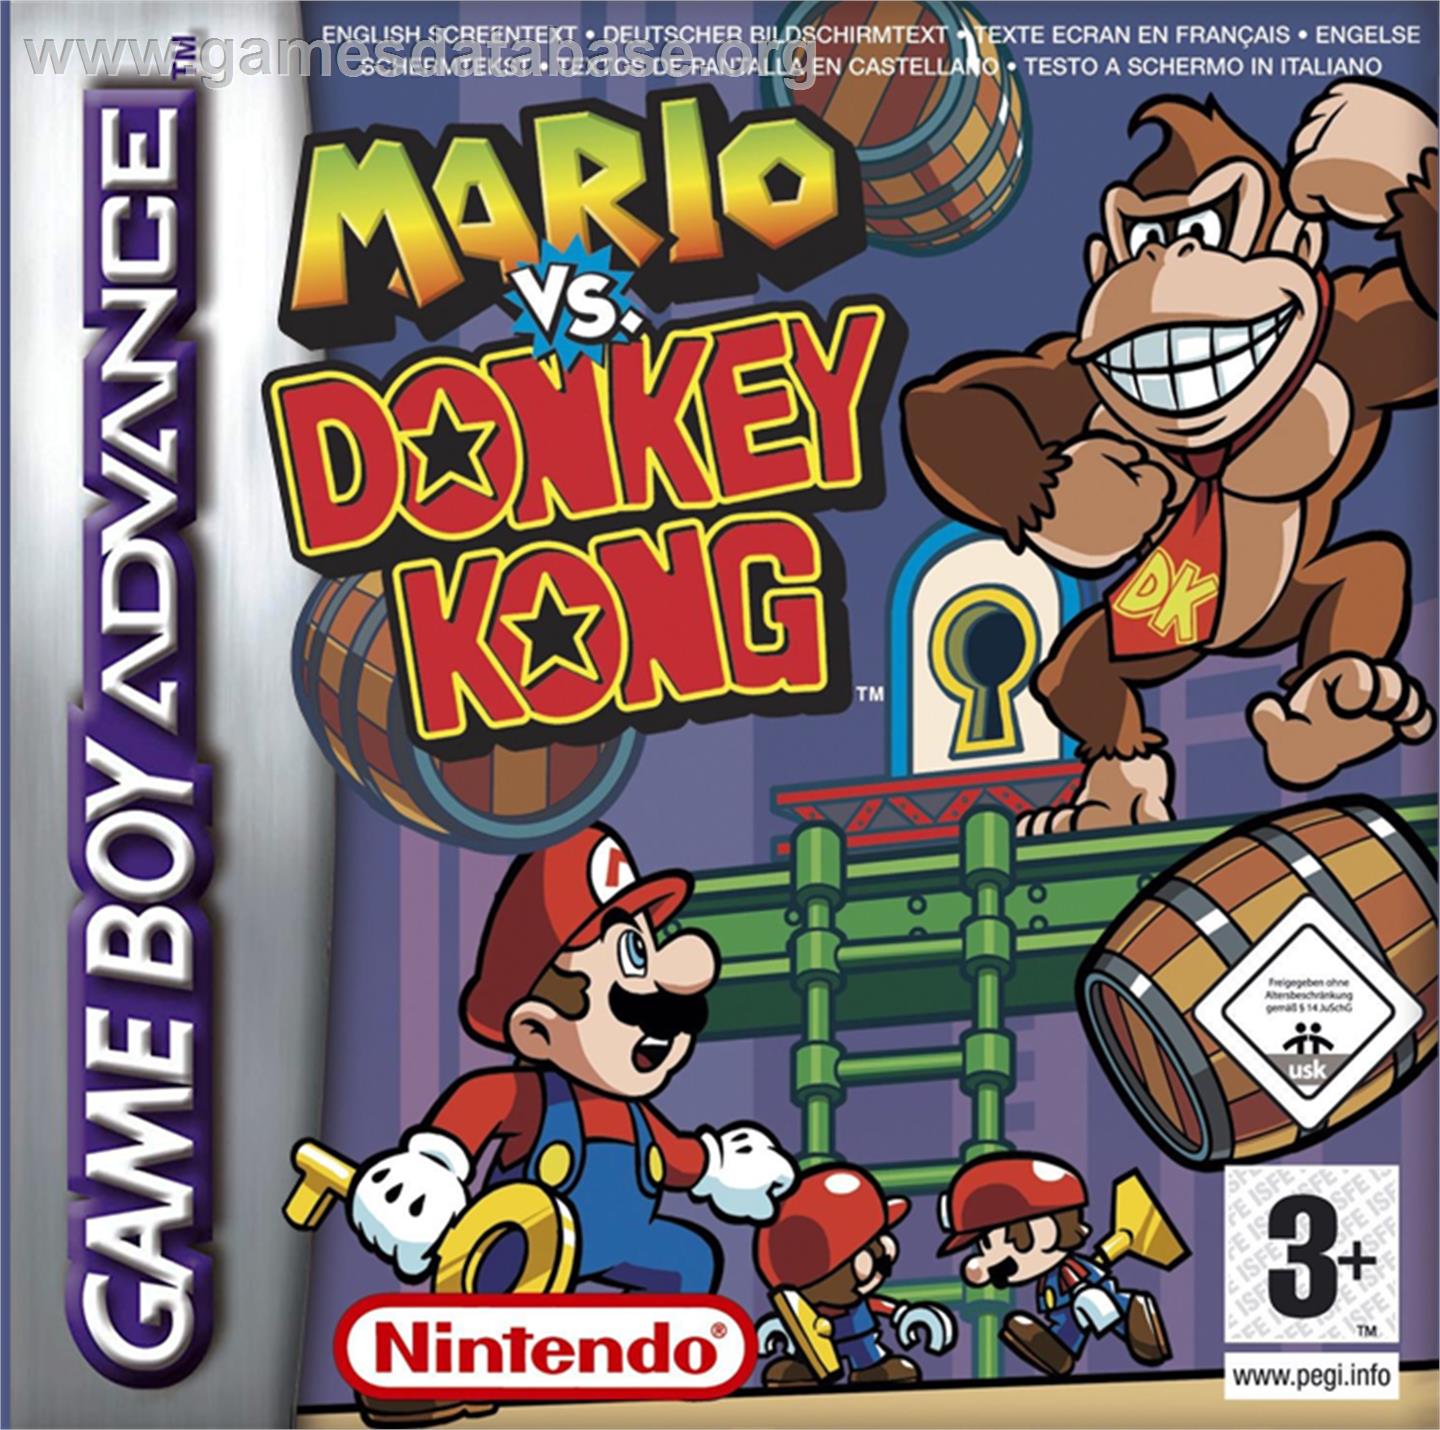 Mario vs. Donkey Kong - Nintendo Game Boy Advance - Artwork - Box